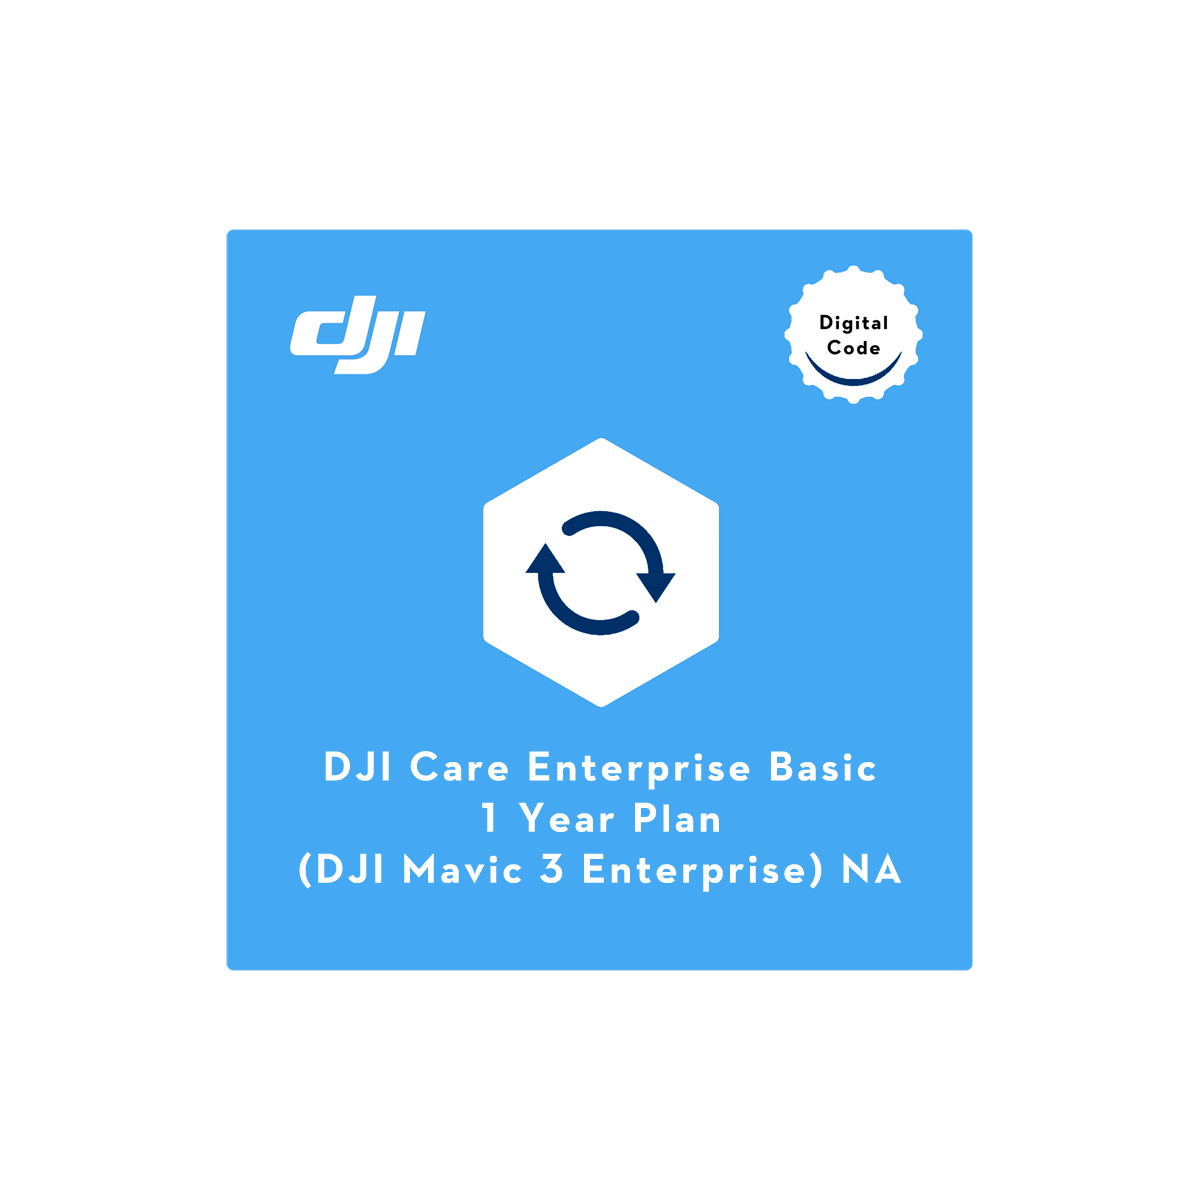 DJI Care Enterprise Basic (Mavic 3 Enterprise) NA